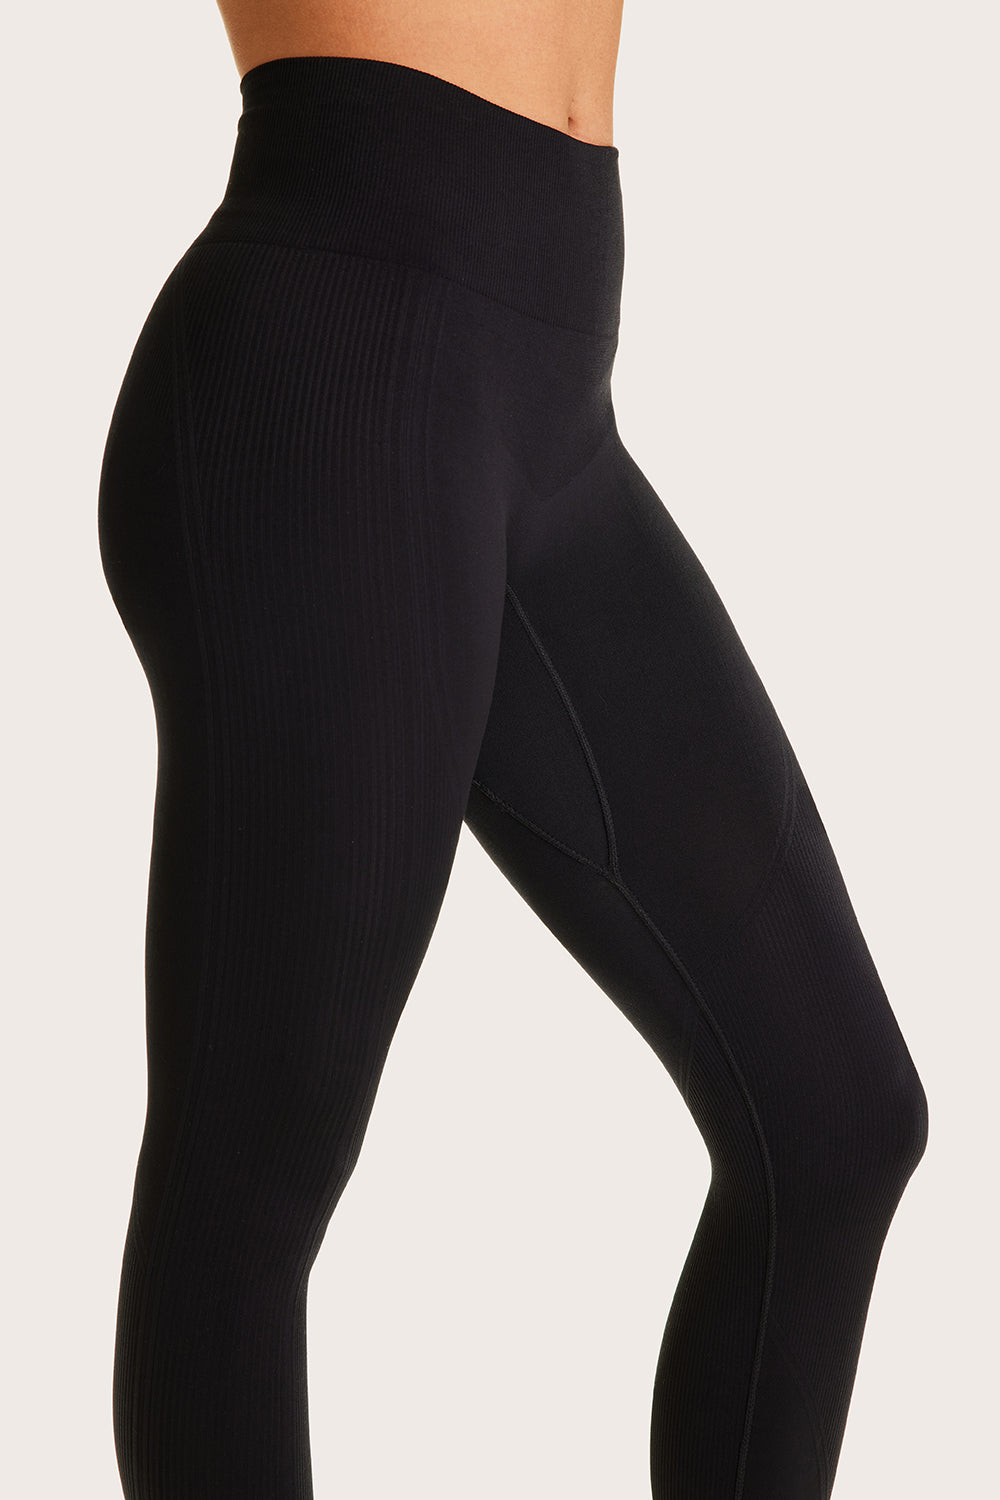 Alala women's seamless stirrup leggings in black